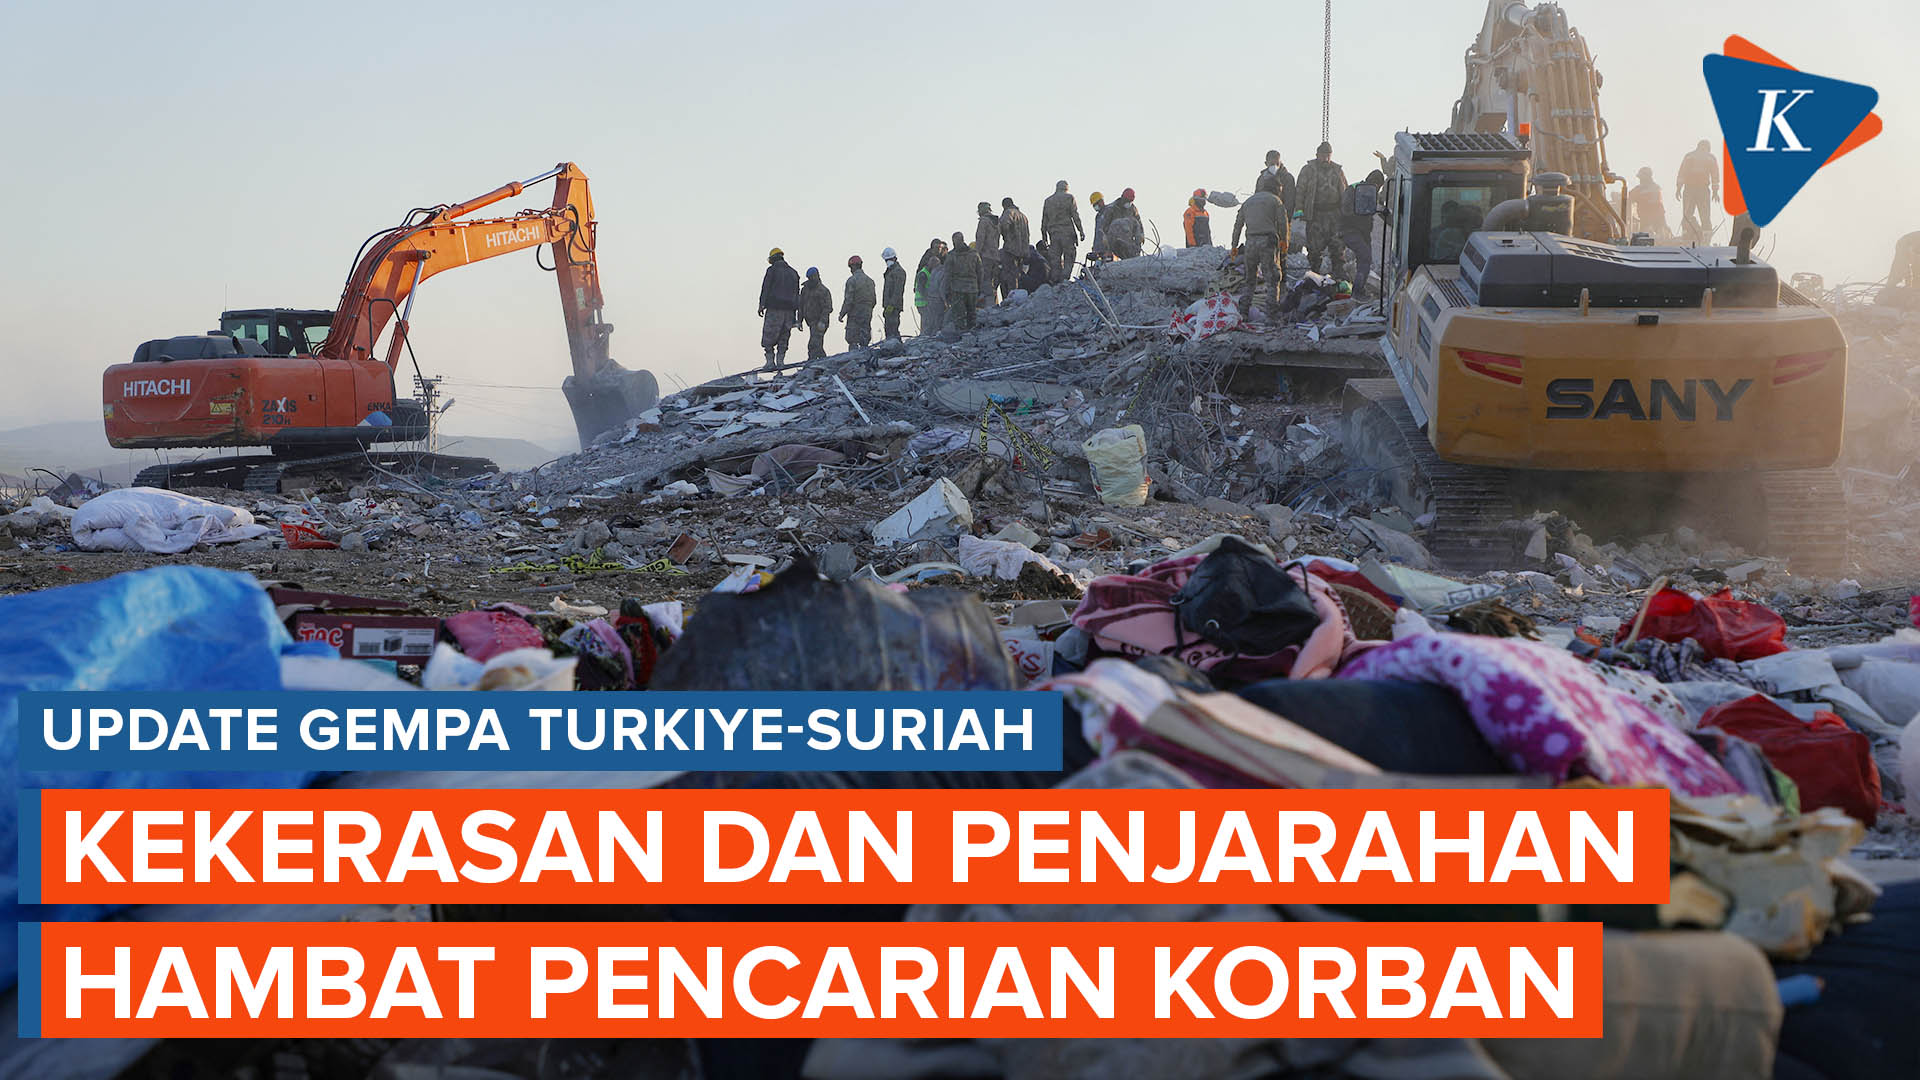 Kekerasan dan Penjarahan Terjadi di Tengah Bencana Gempa Turkiye, Pencarian Korban Terhambat